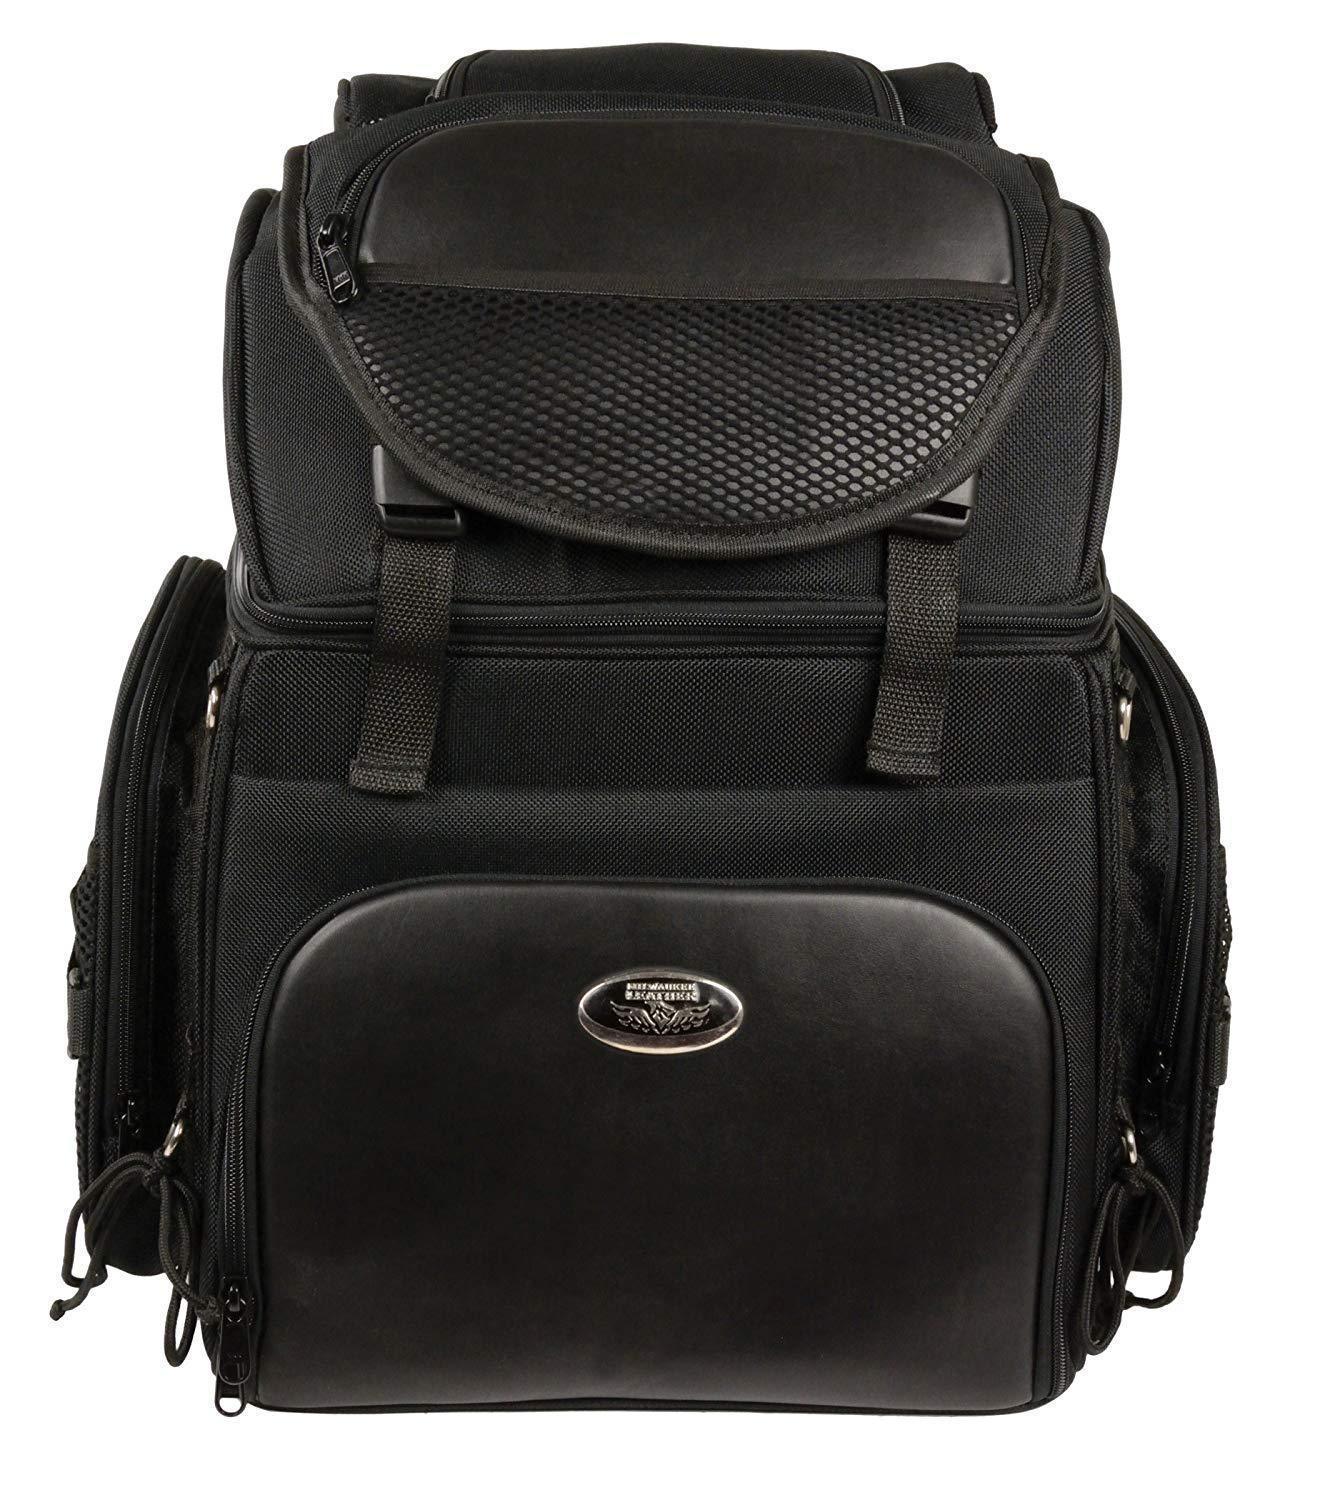 Milwaukee Leather X-689-Bag Large Textile Black Waterproof Touring Motorcycle Bar Back Pack - Black